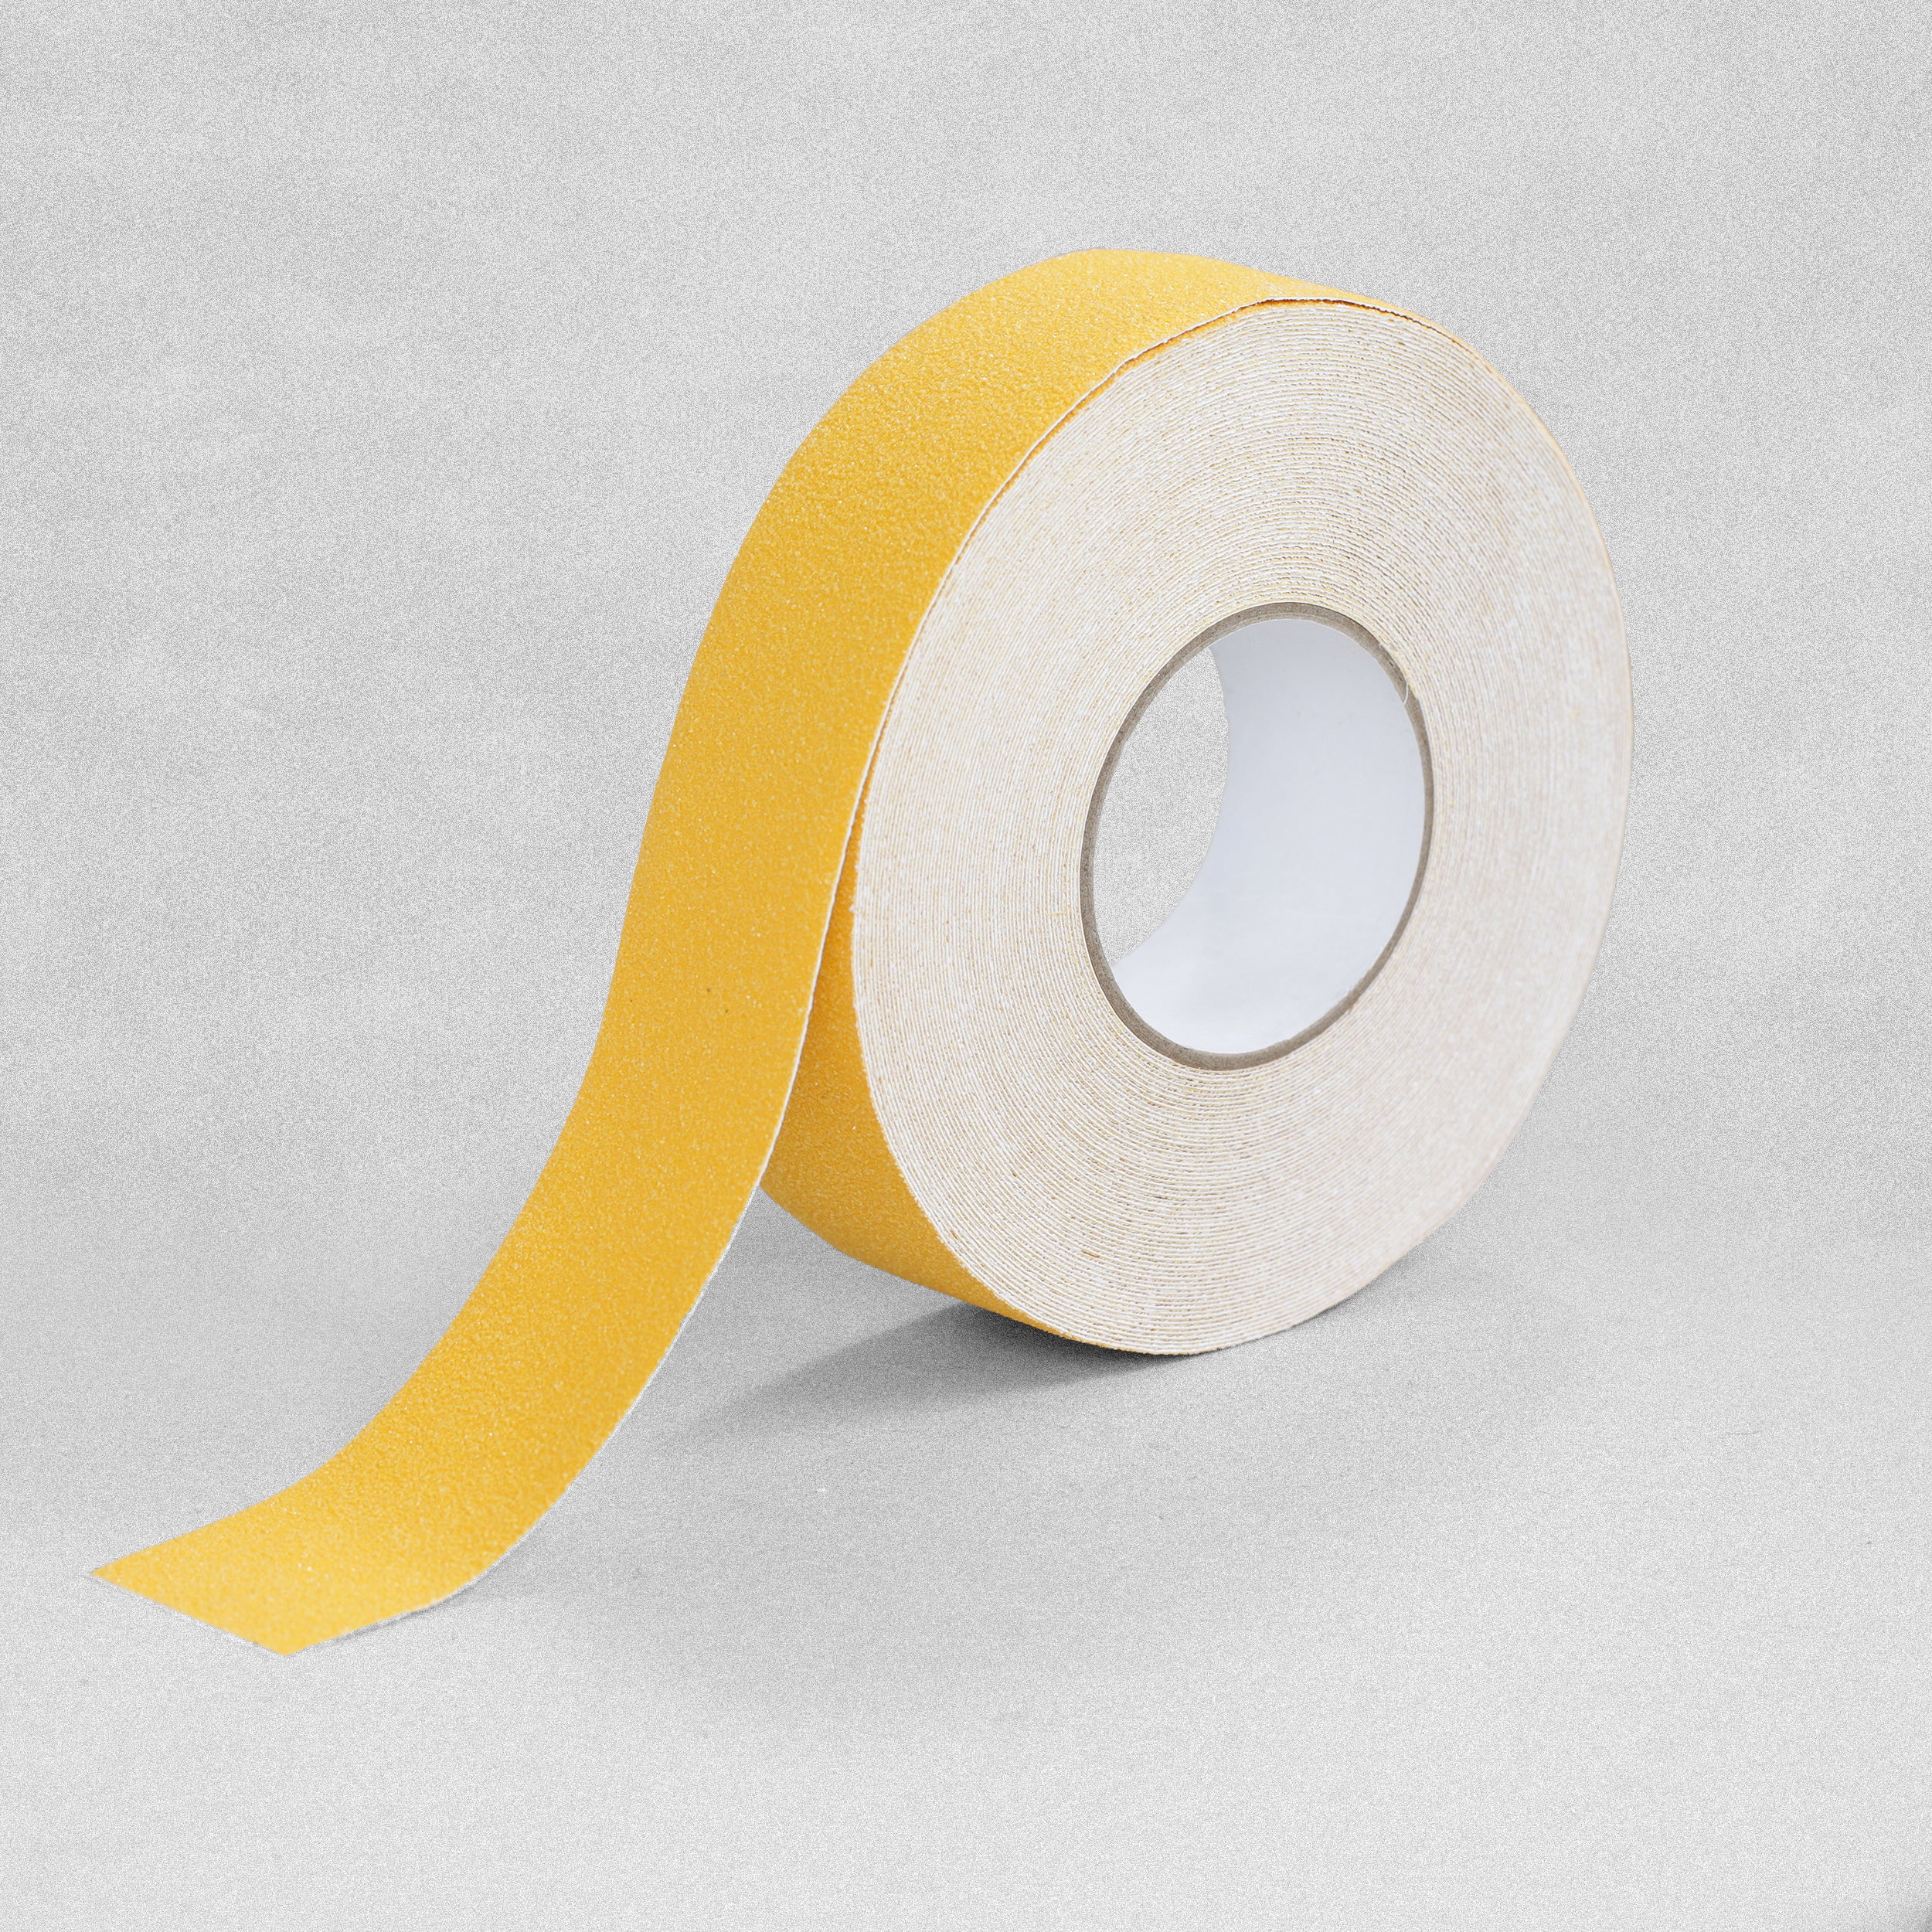 Blaze Anti-Skid Tape 50mm x 25m - Yellow